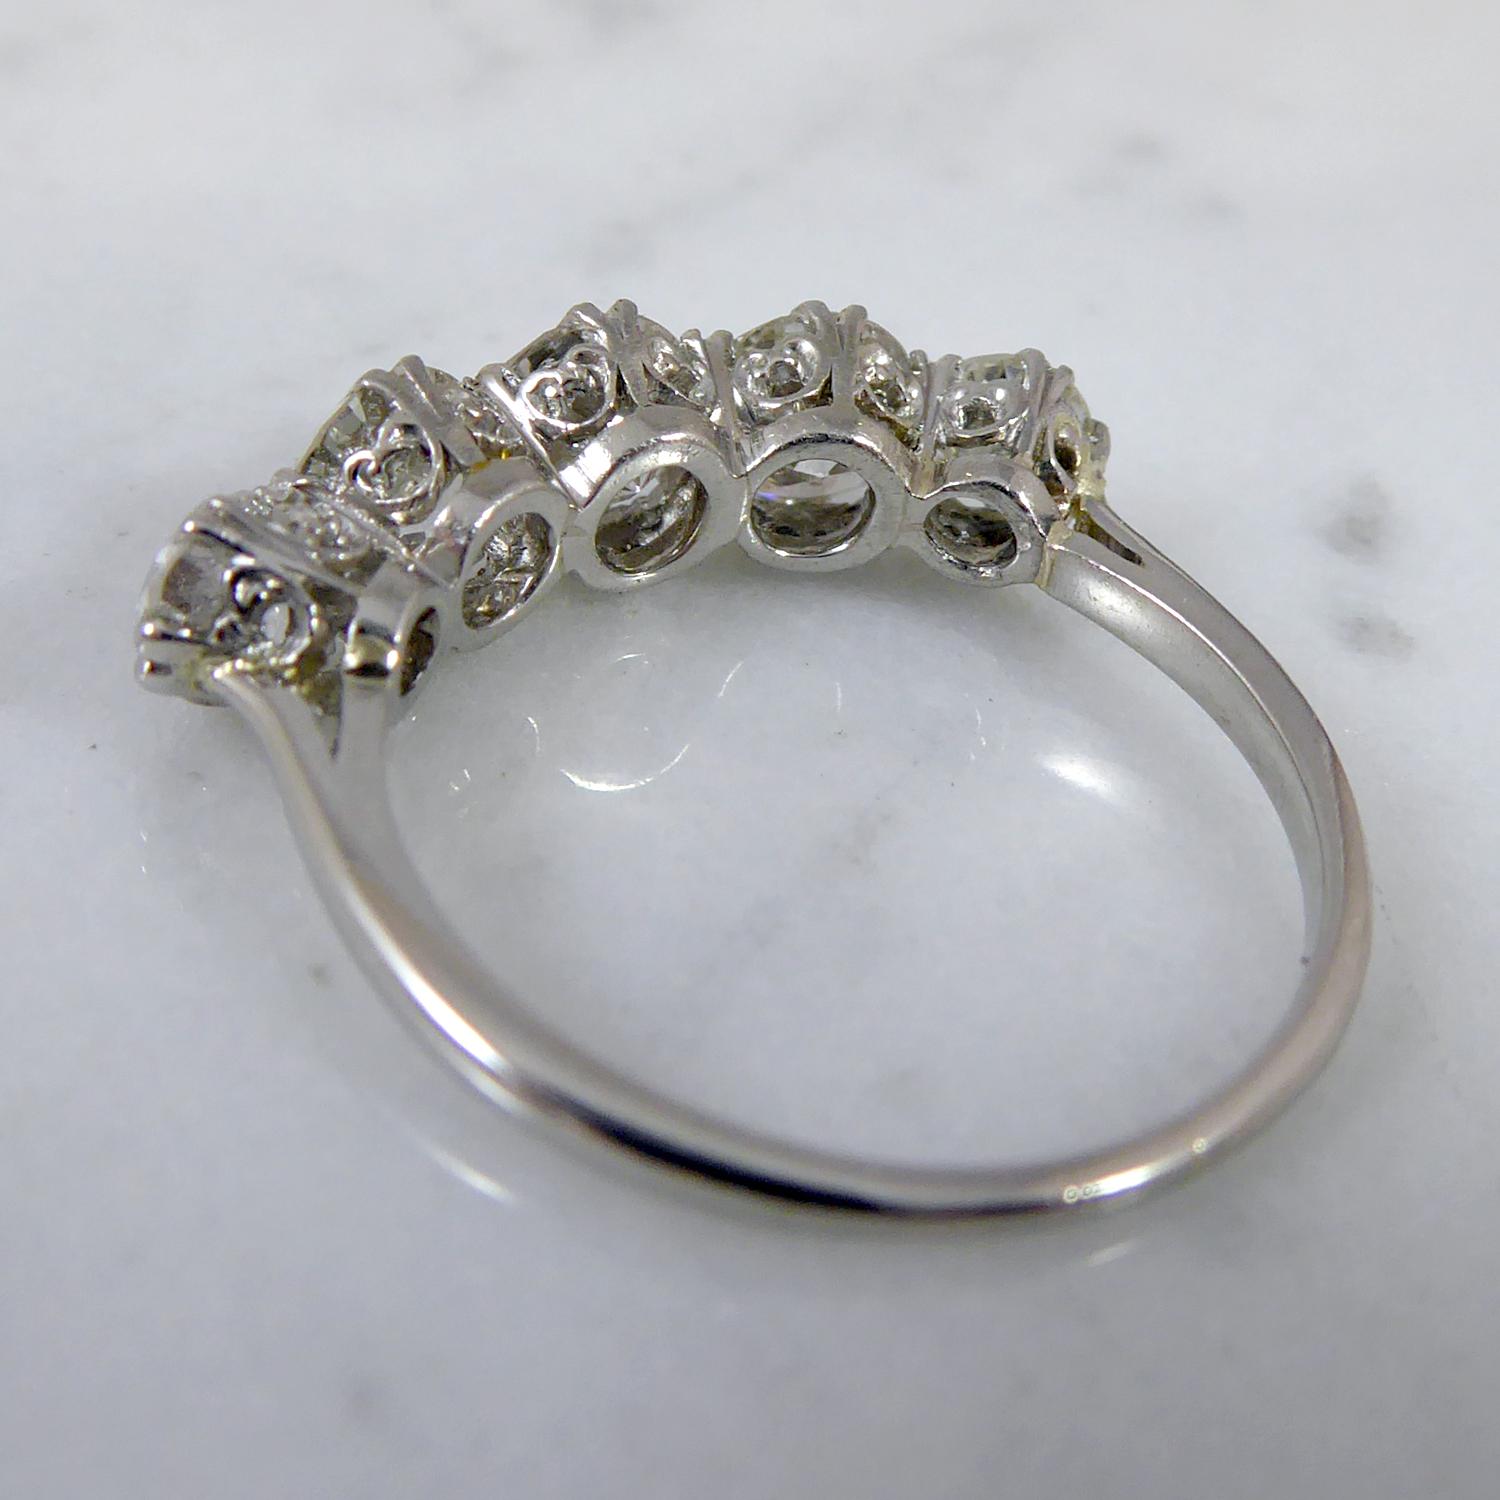 Women's 1.98 Carat Diamond Ring, Five Early Brilliant Cut Diamonds, Pre-1930s